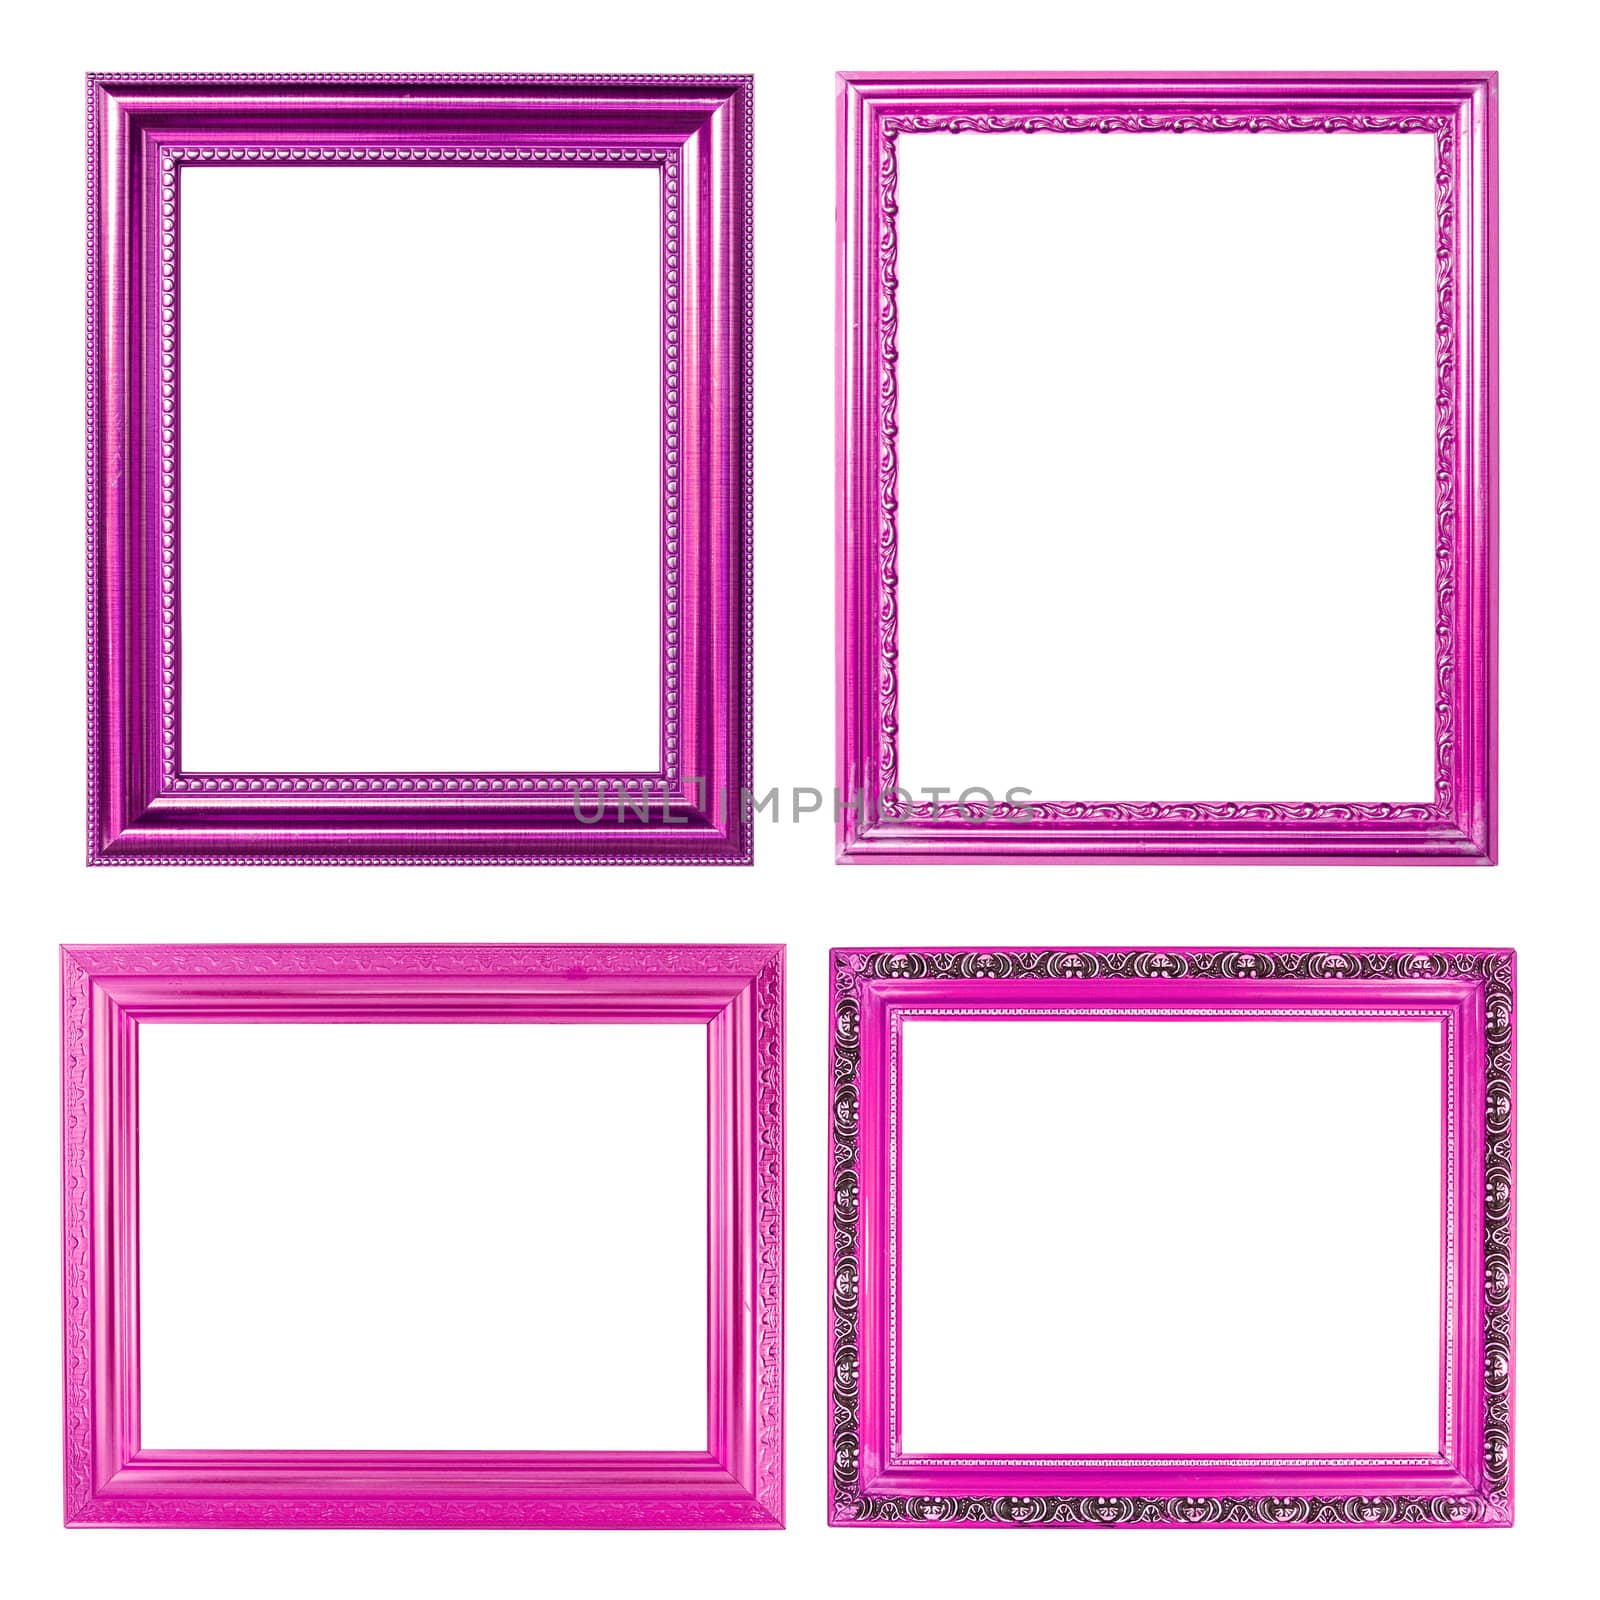 4 pink frame on white background